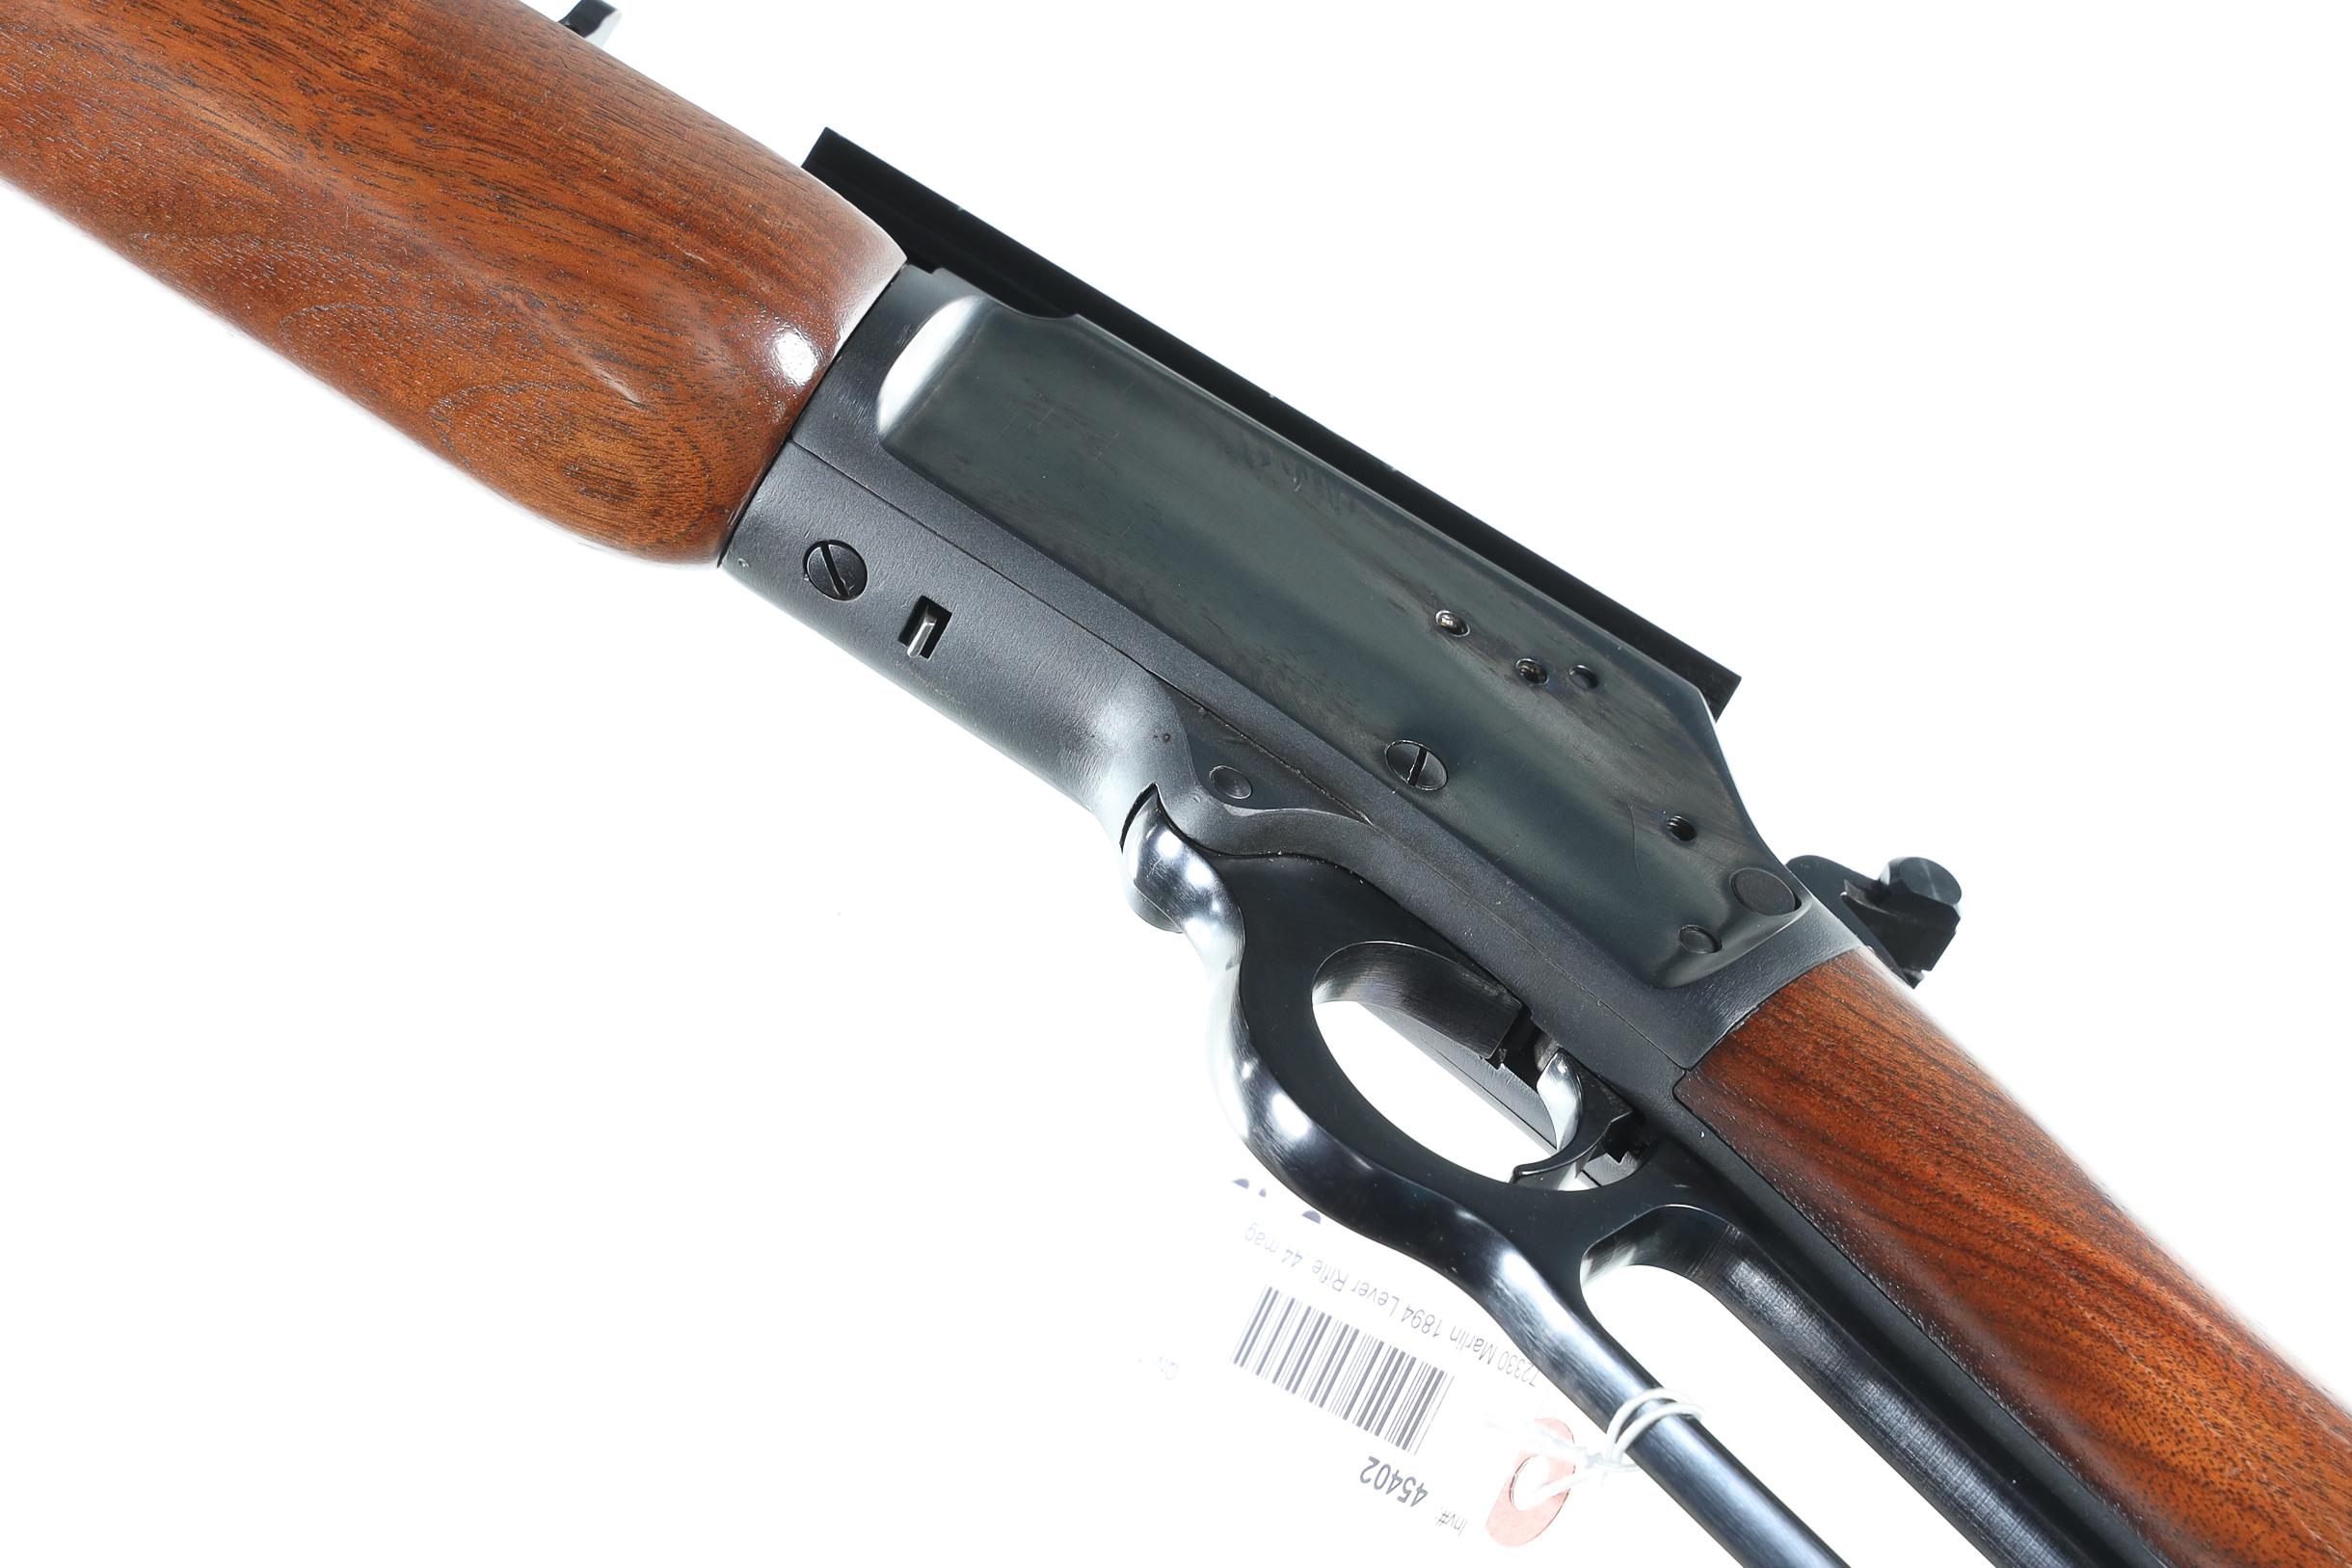 Marlin 1894 Lever Rifle .44 mag